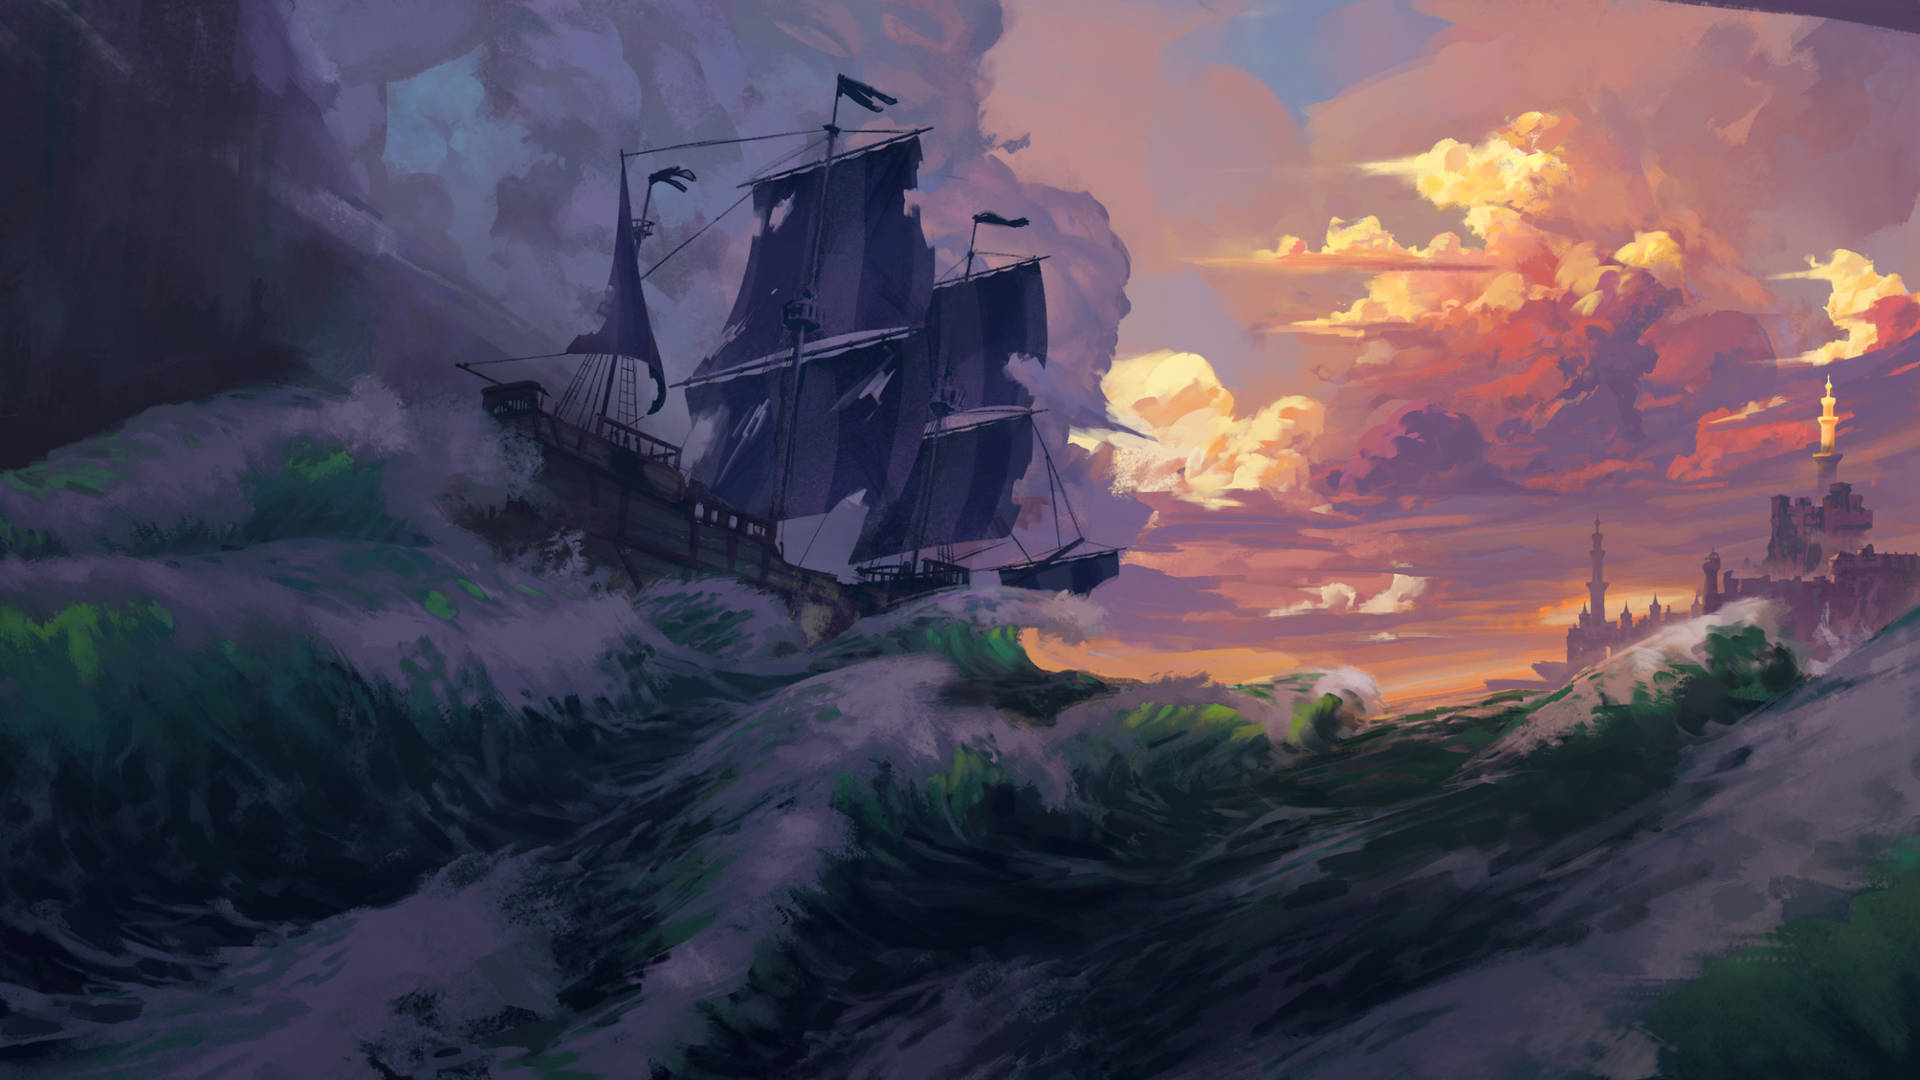 Pirate Ship Digital Art Background